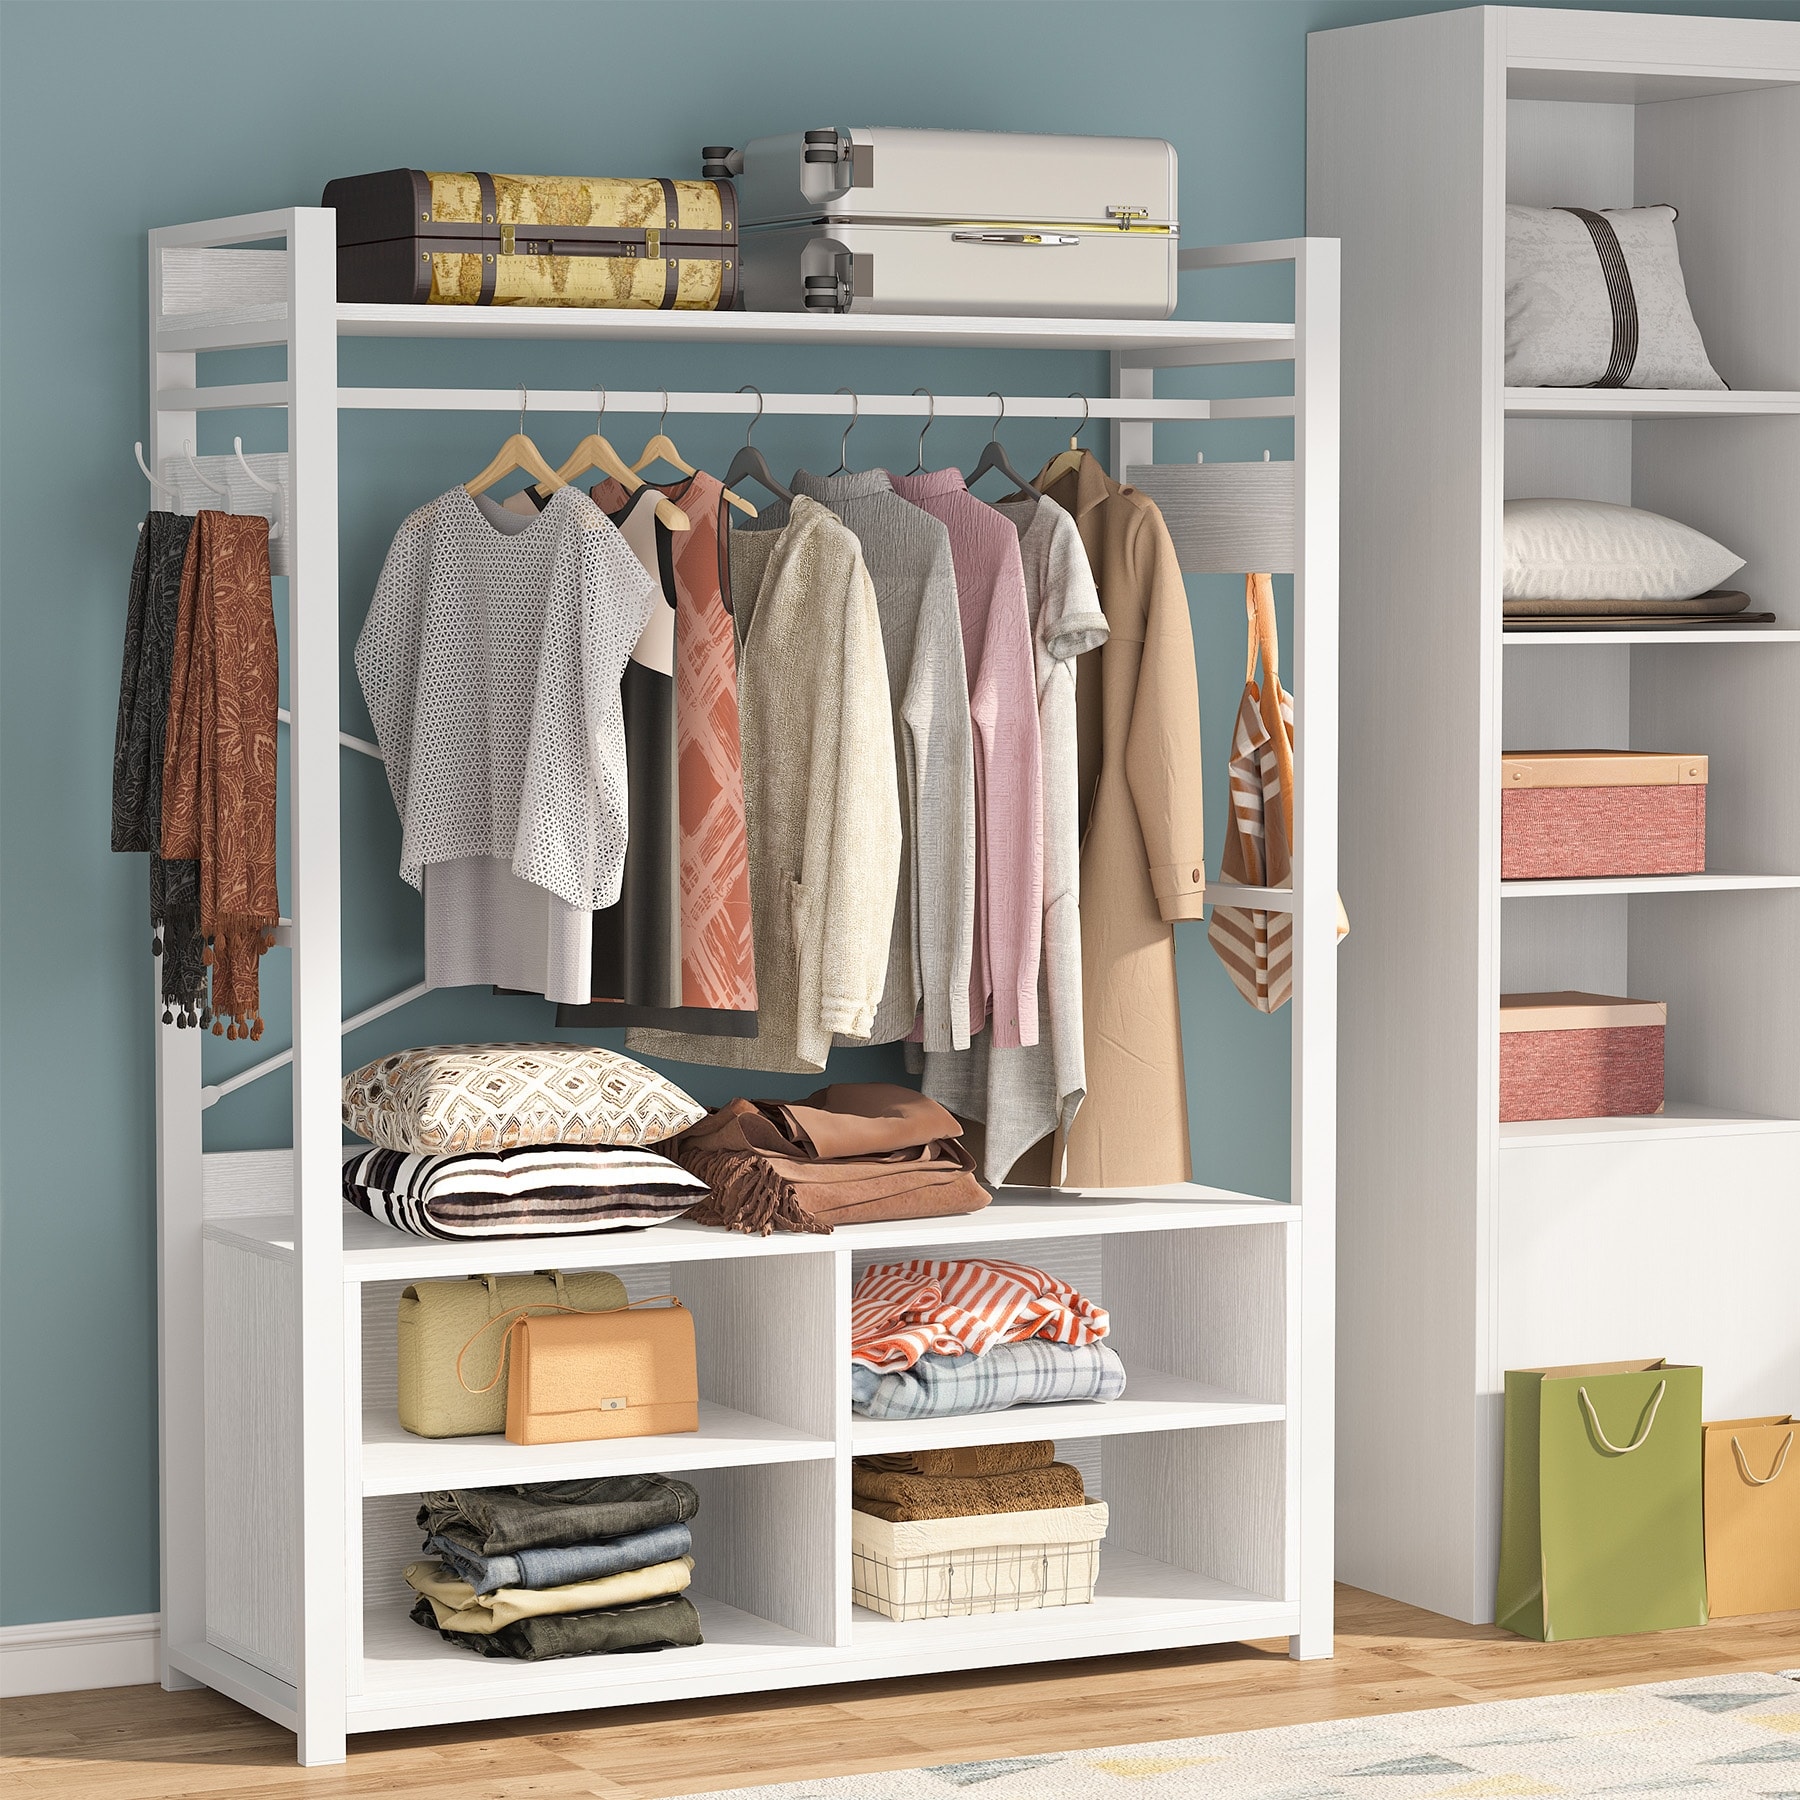 https://ak1.ostkcdn.com/images/products/is/images/direct/d3723b55f747ec6f7bee84e72f1986fc7803619a/Wooden-clothing-closet-freestanding-closet-garment-rack-with-shelf.jpg